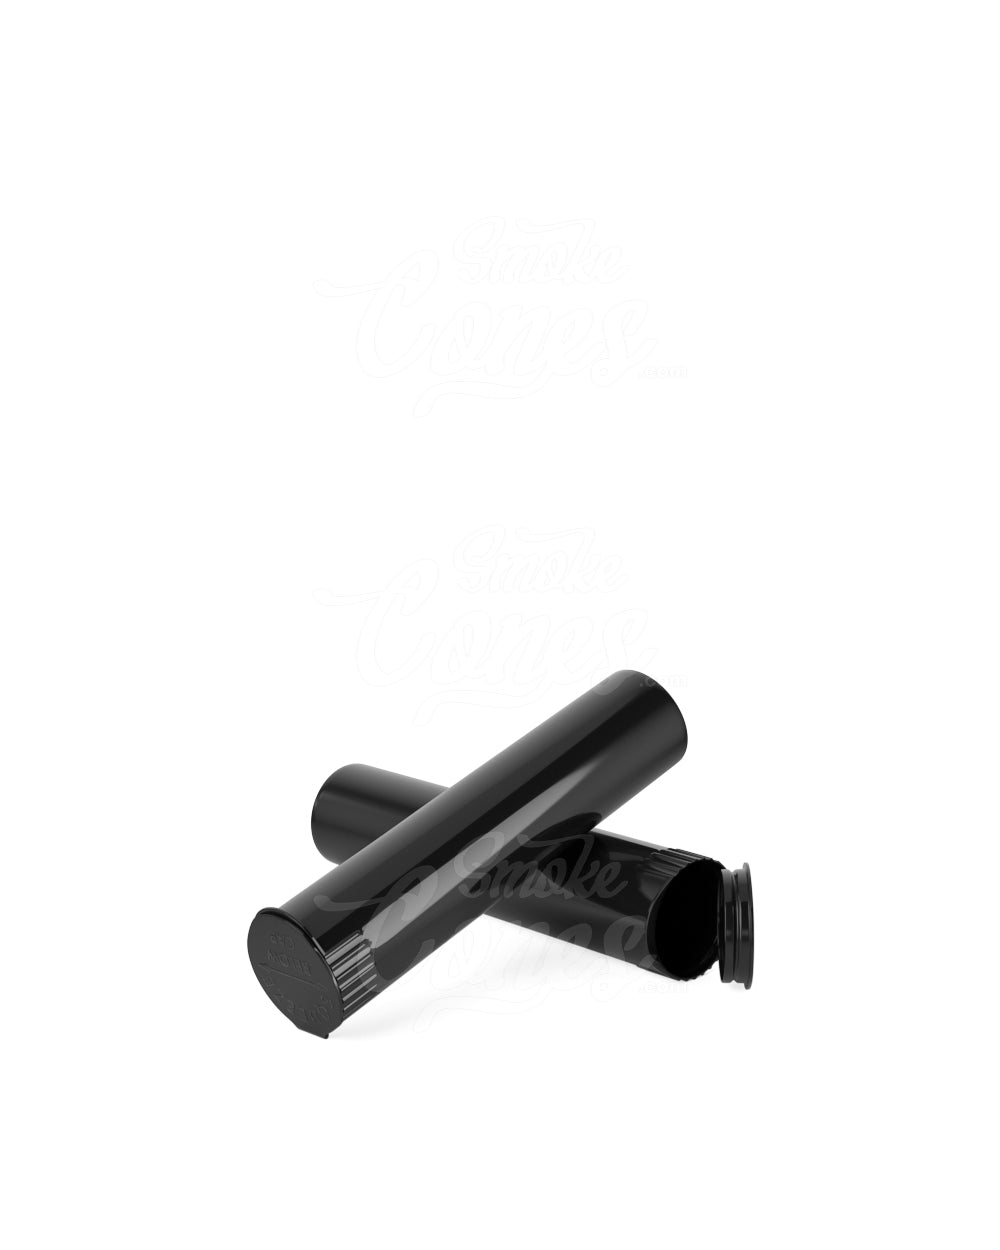 80mm Child Resistant Pop Top Opaque Black Plastic Pre-Roll Tubes 1000/Box